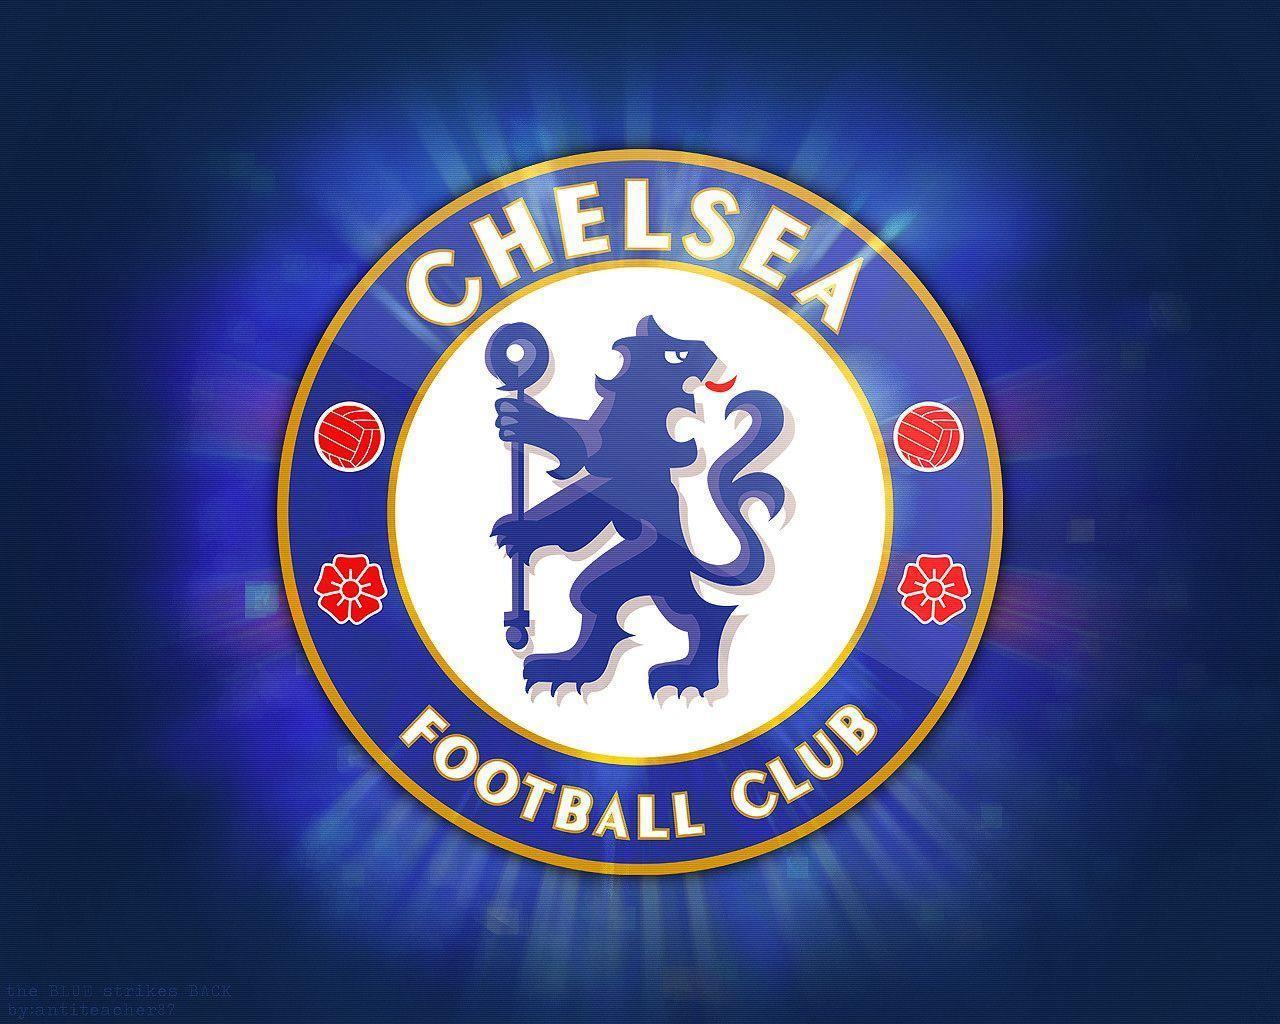 Chelsea Football Club Logo in Sports